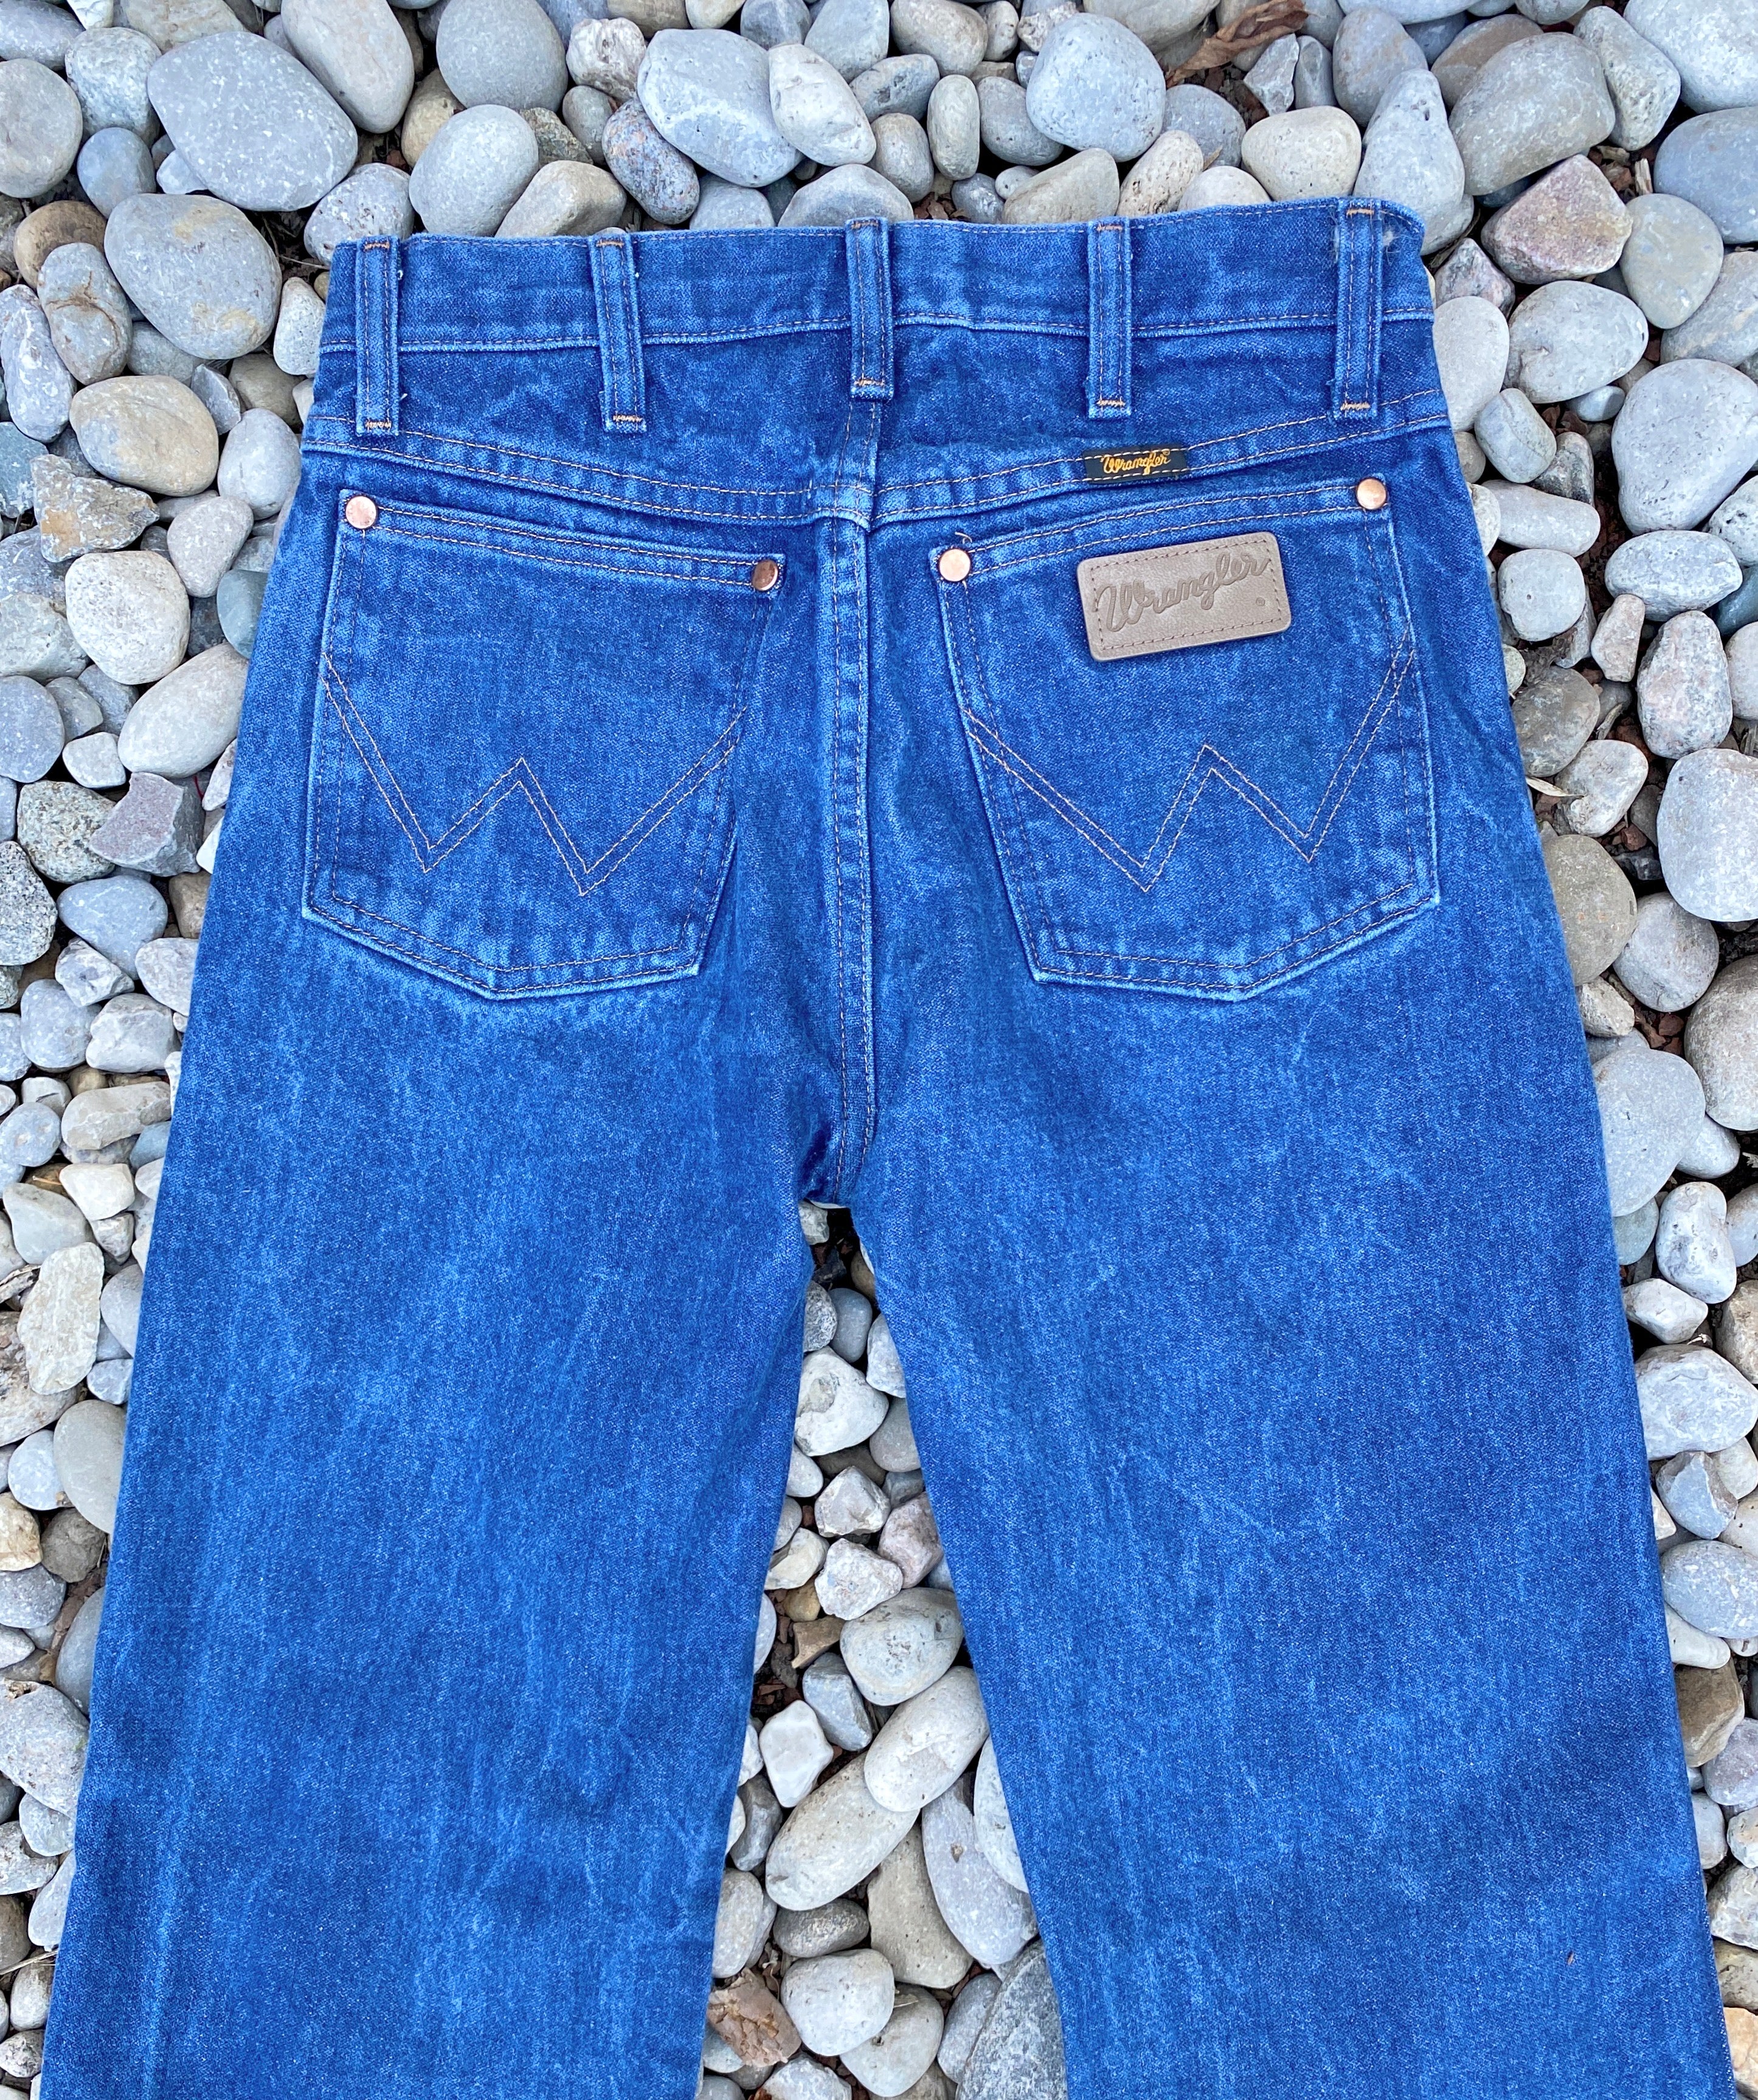 Vintage Wrangler Dark Wash Jeans size 27 to 28